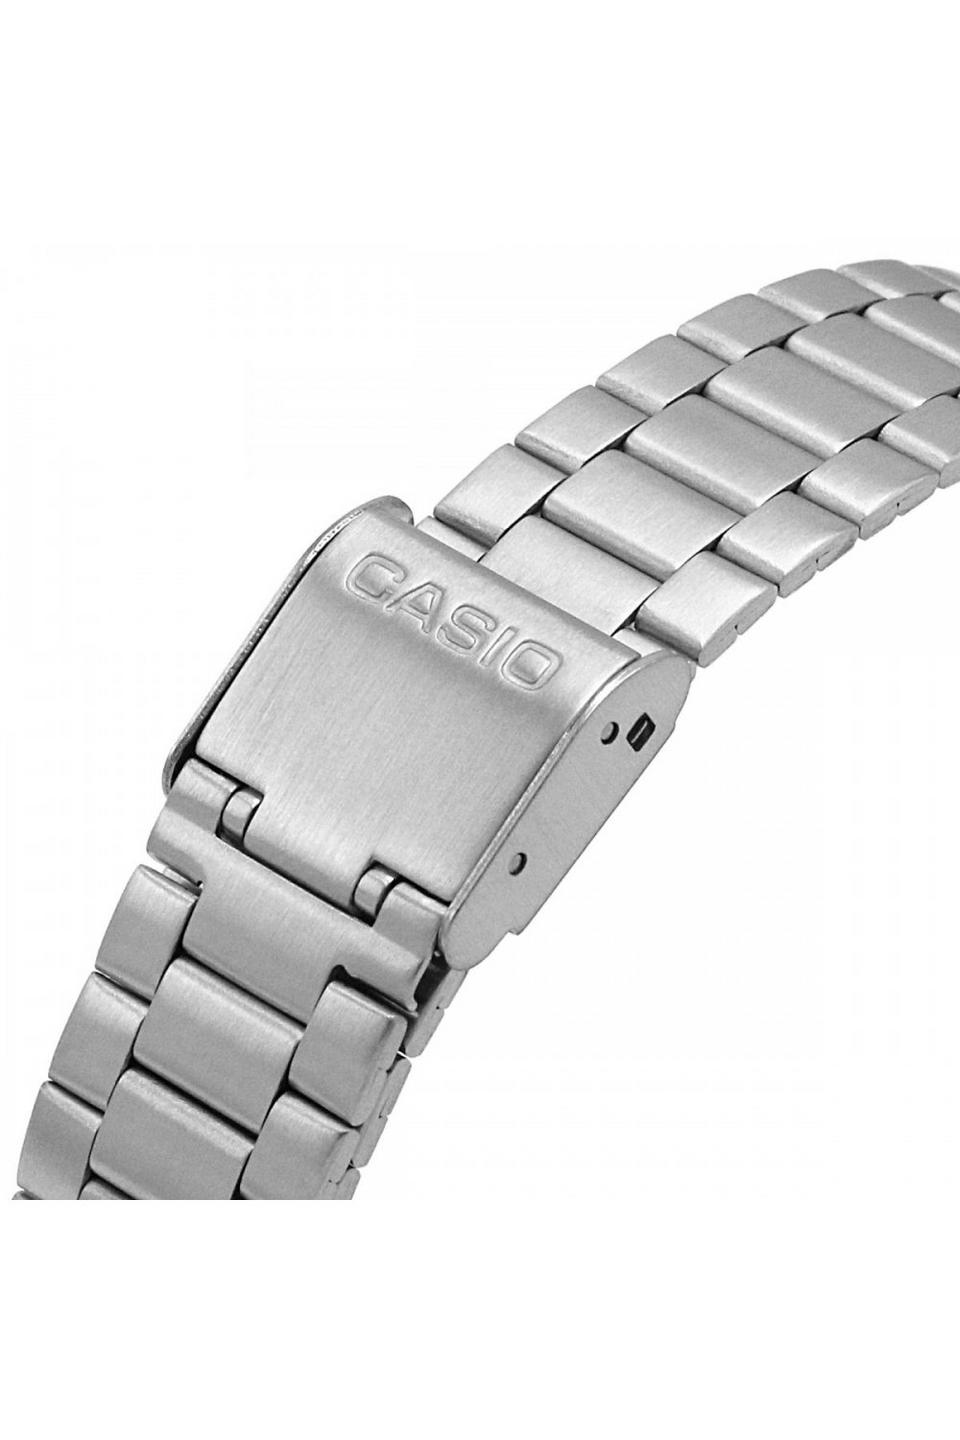 Watches | Retro Stainless Steel Classic Digital Quartz Watch - A168Wem-1Ef Casio